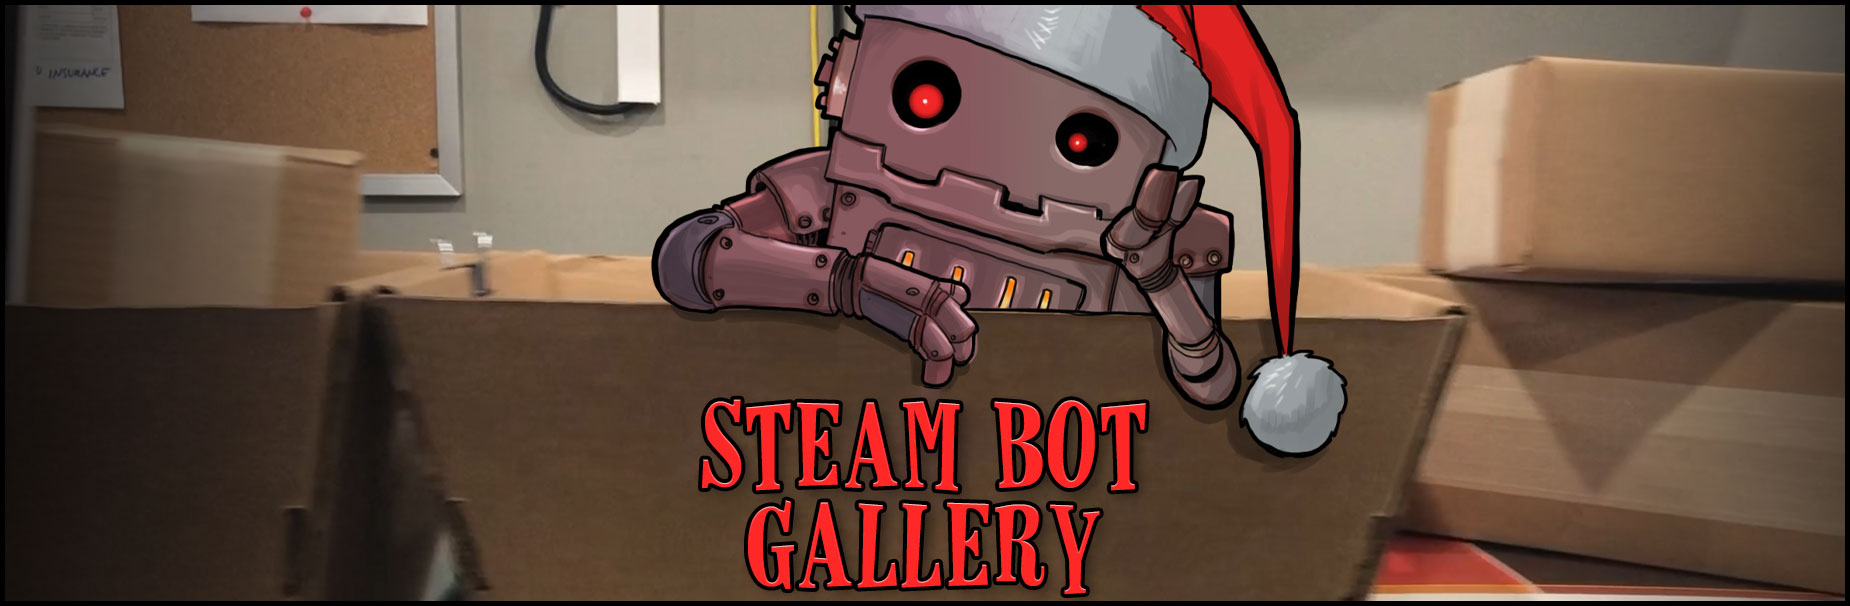 Steam Bot Gallery